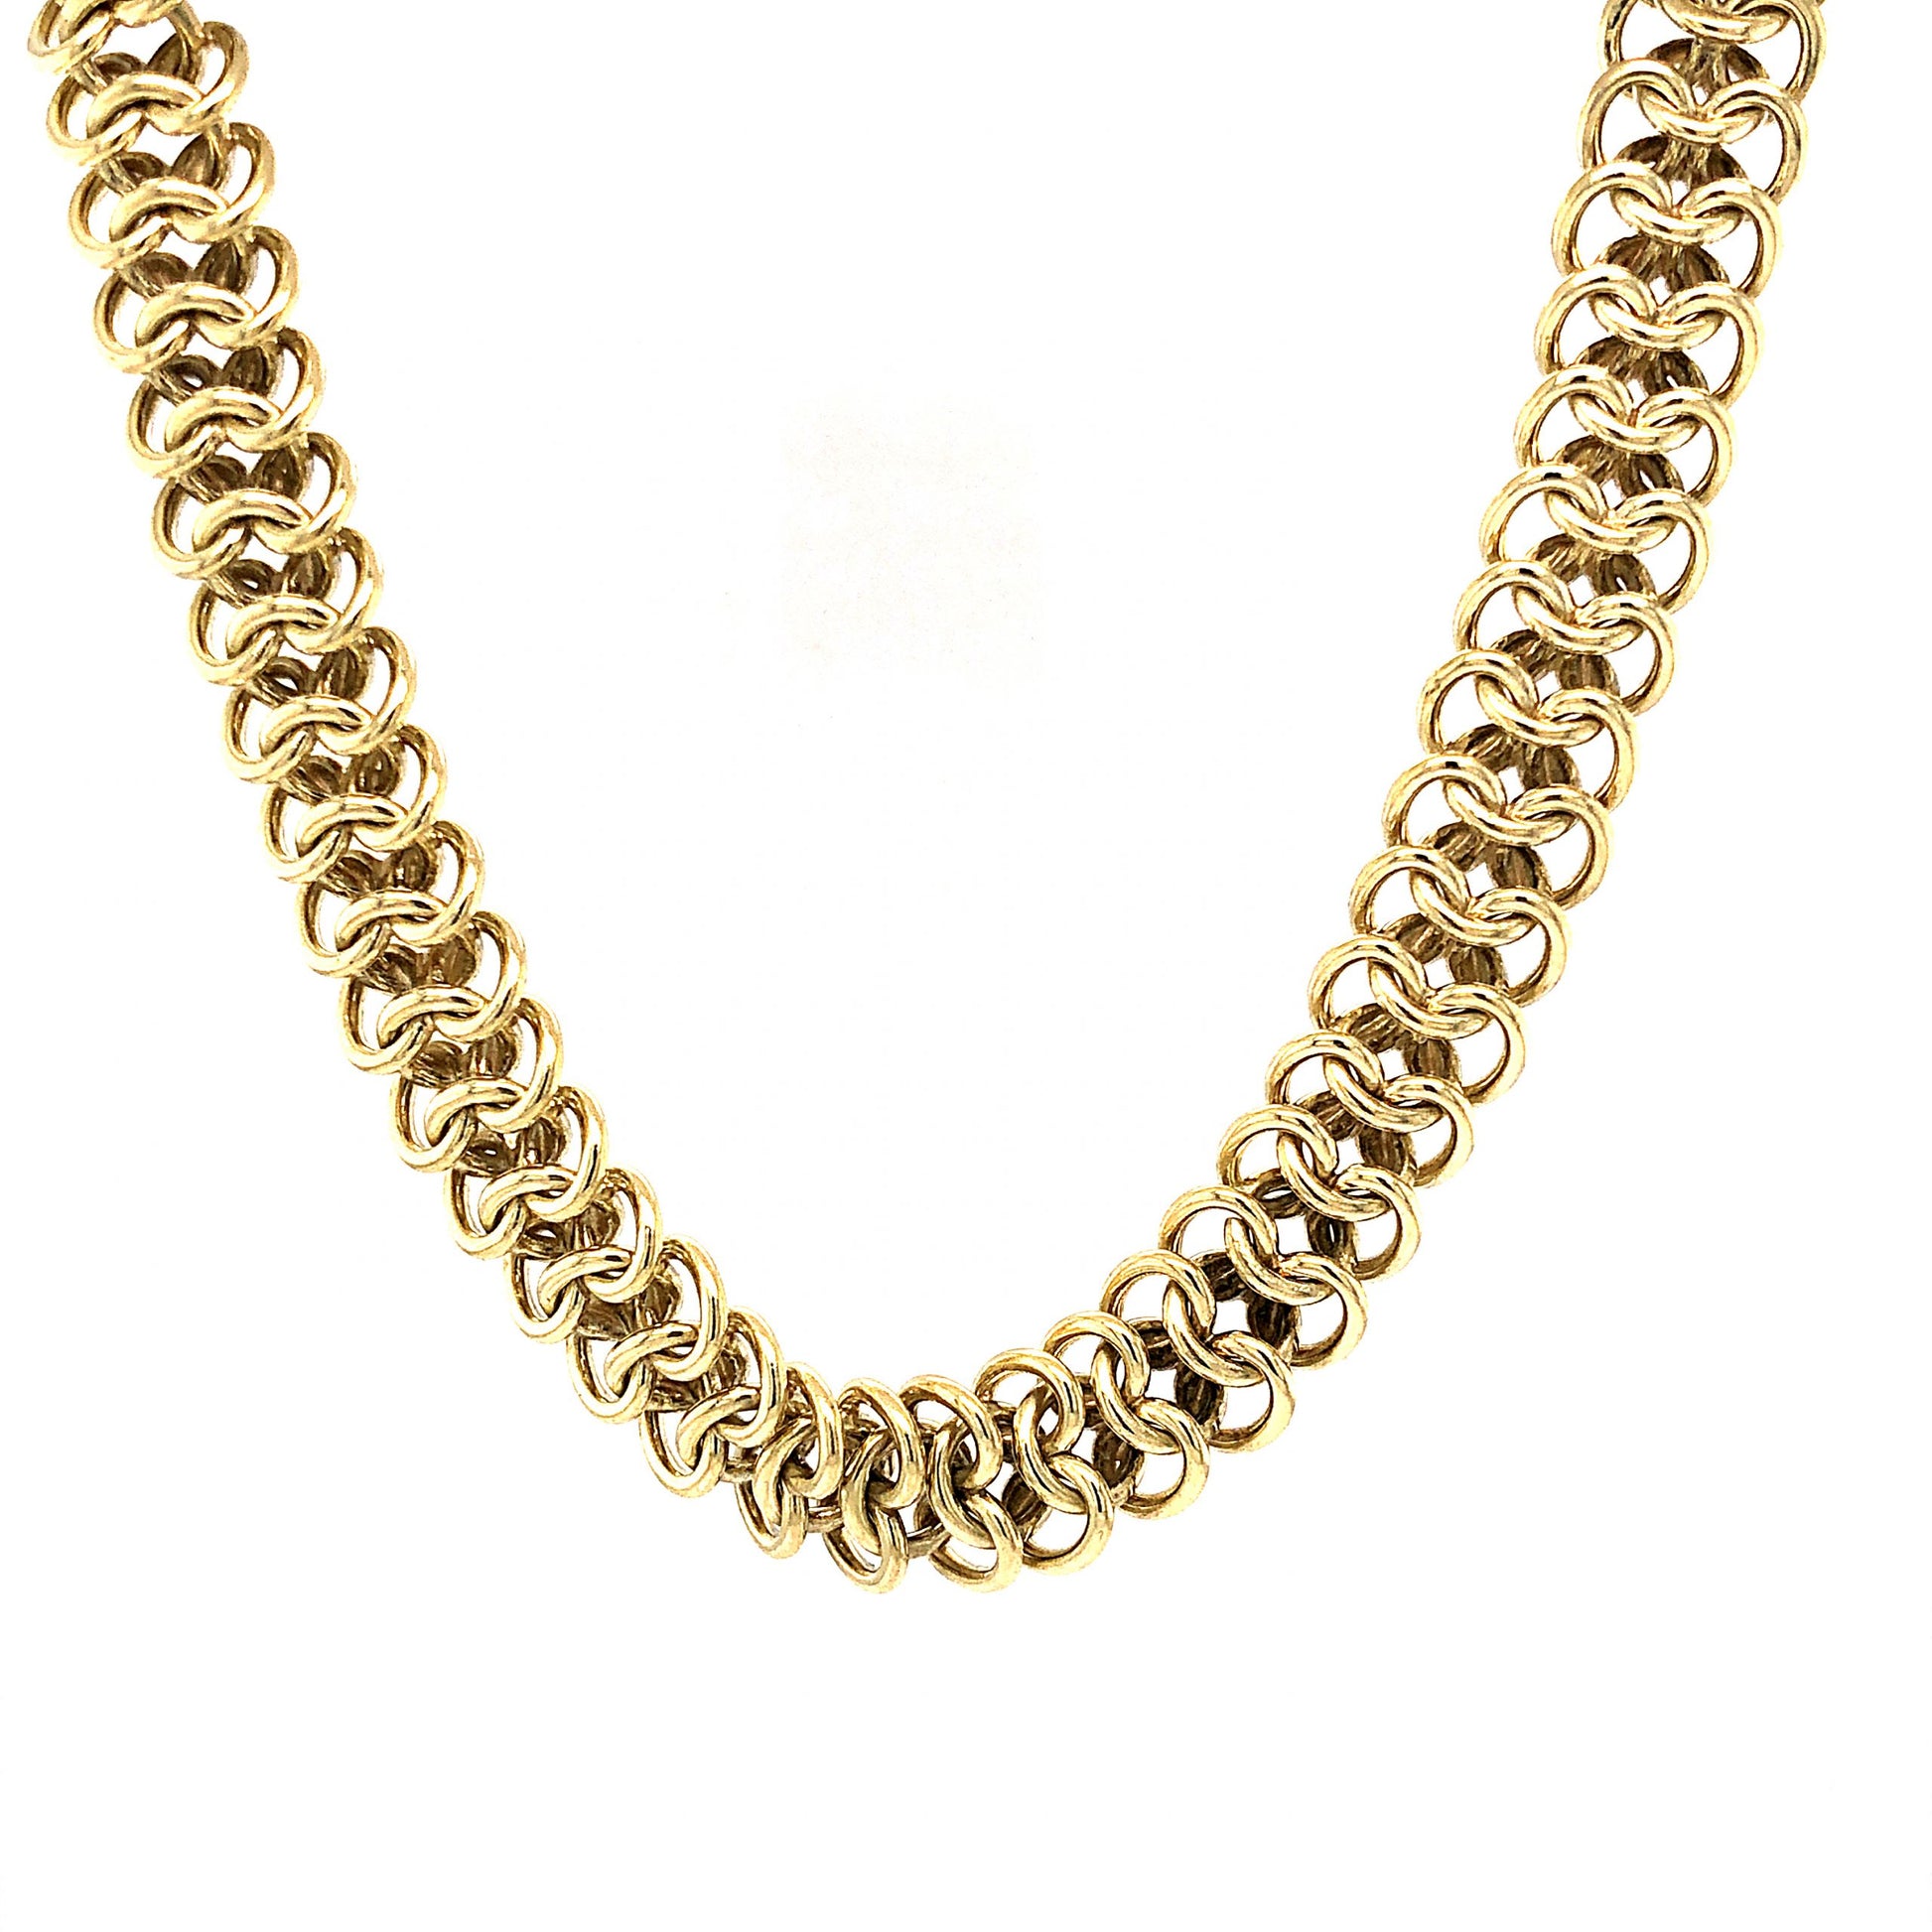 German Chain Necklace & Bracelet Set in 14k Yellow GoldComposition: 14 Karat Yellow Gold Total Gram Weight: 30.4, 61.1  g Inscription: 585
      